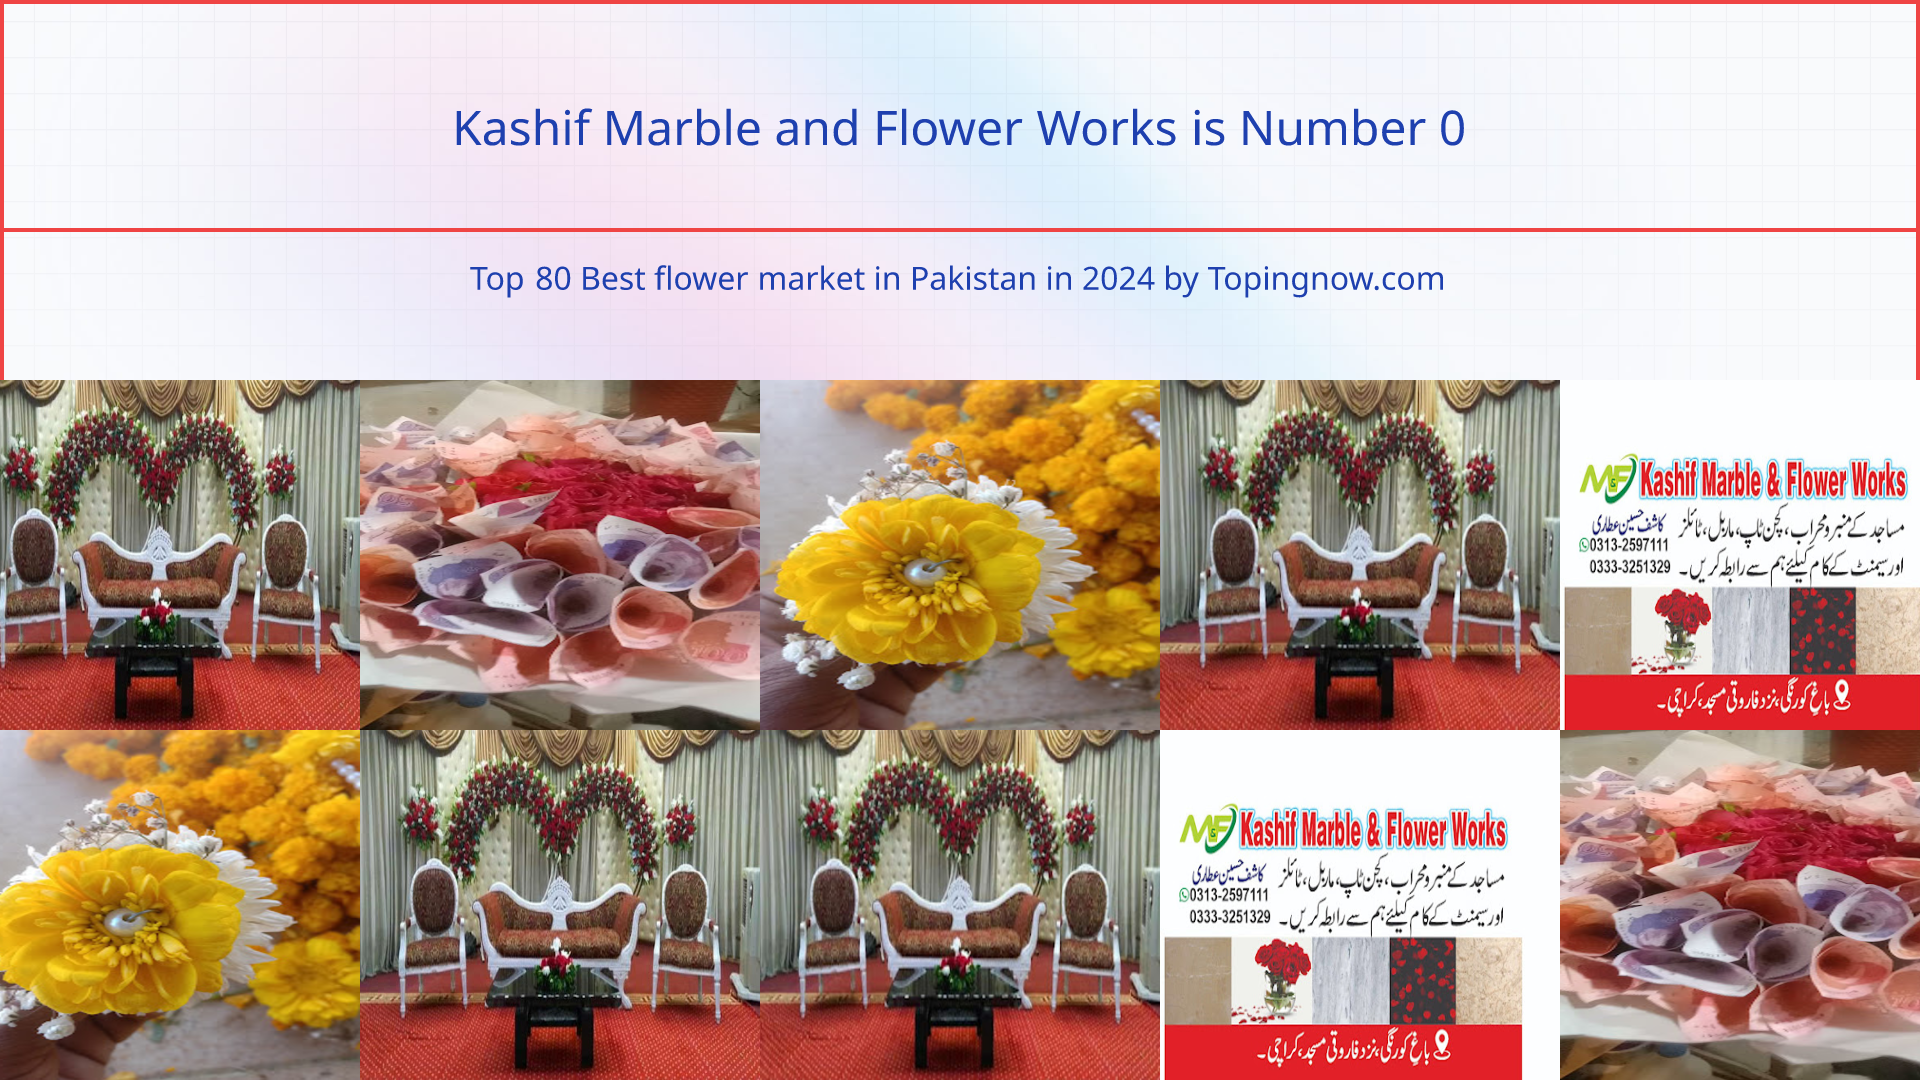 Kashif Marble and Flower Works: Top 80 Best flower market in Pakistan in 2024